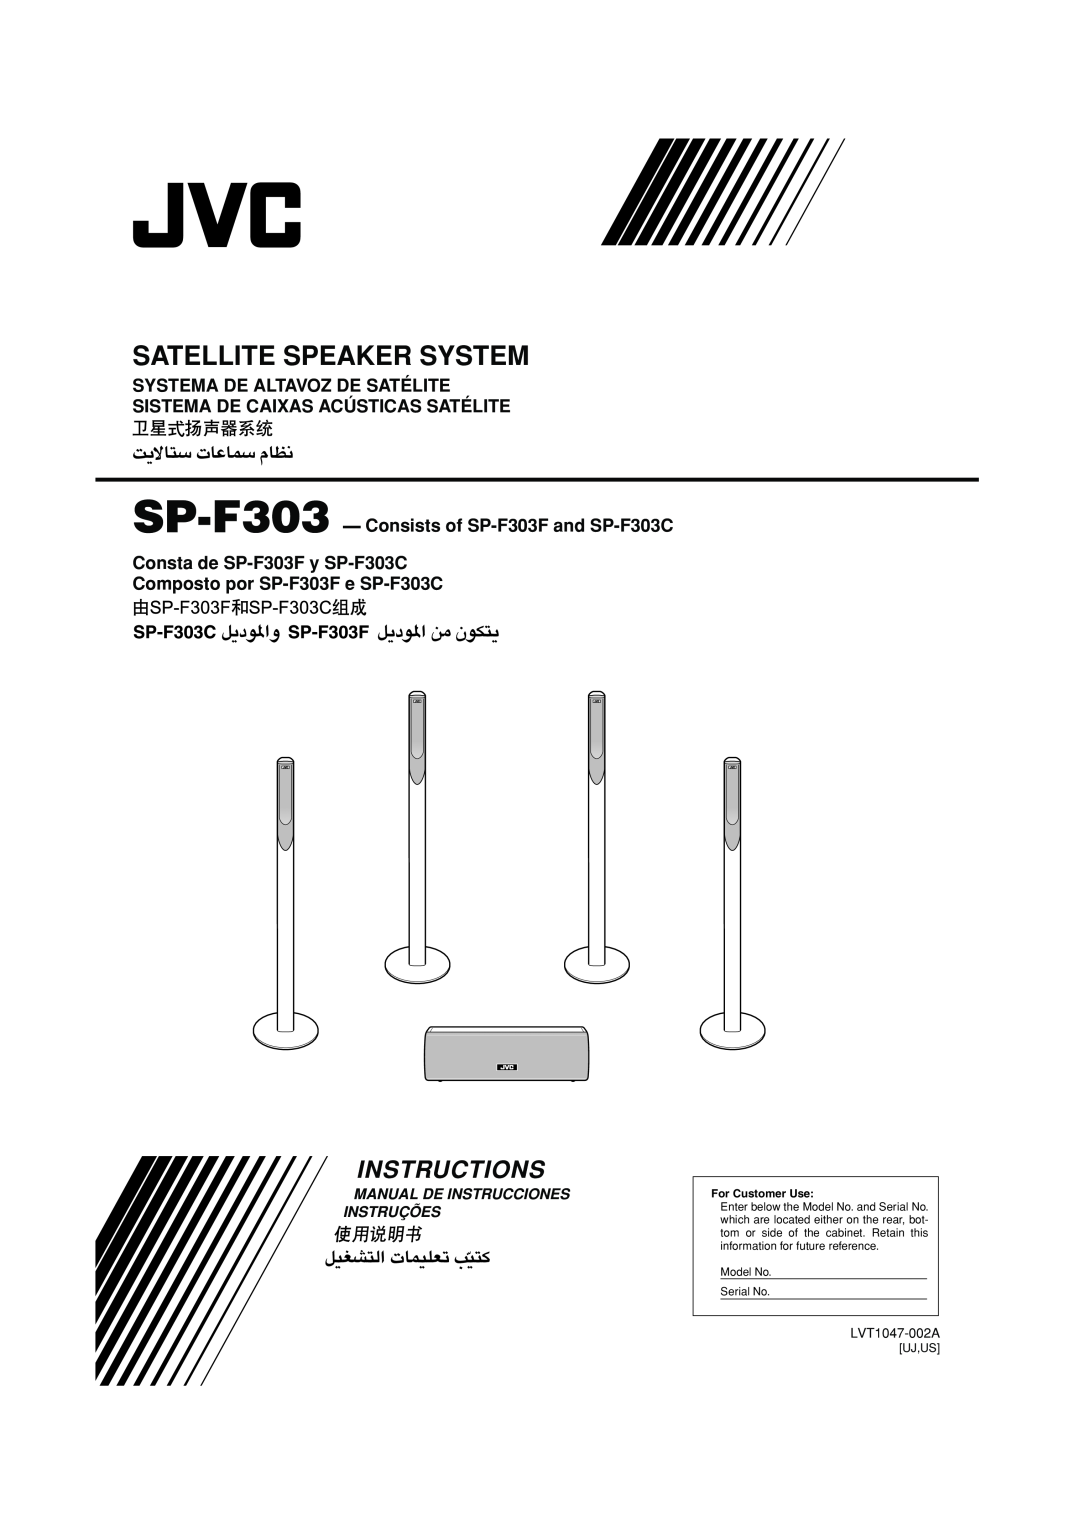 JVC SP-F303 manual Satellite Speaker System, Systema De Altavoz De Satélite, Sistema De Caixas Acústicas Satélite 